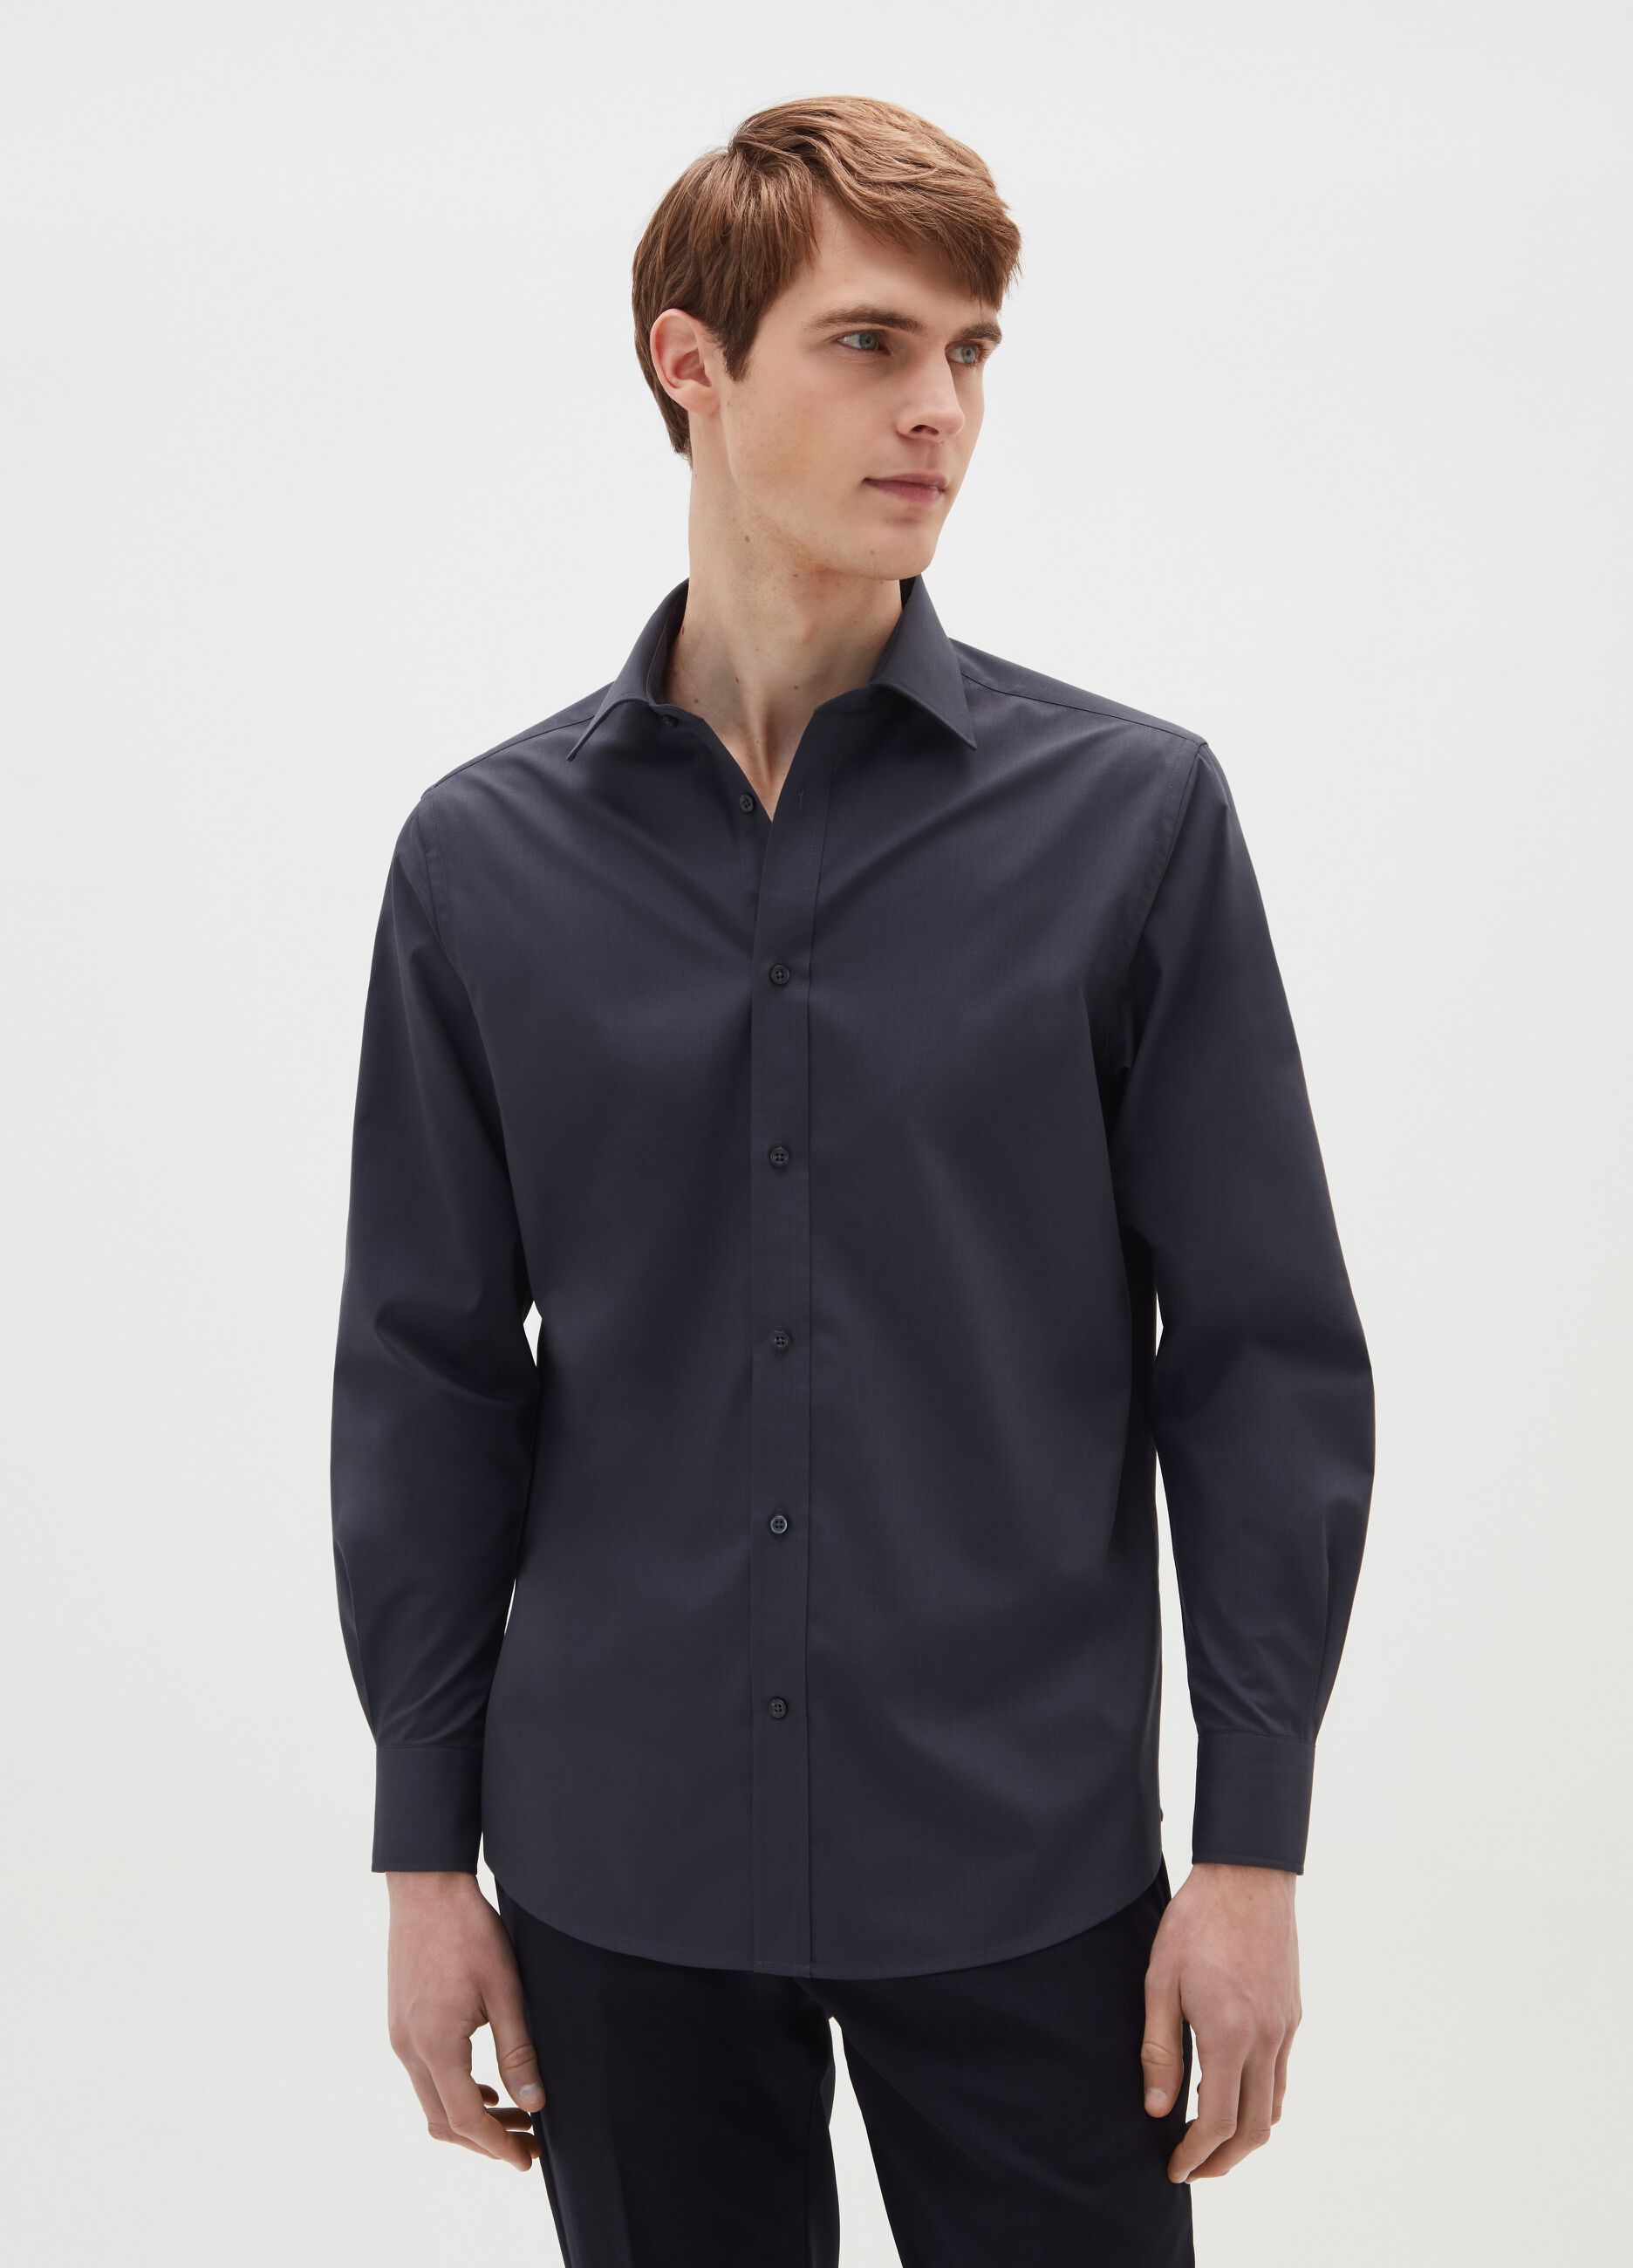 Solid colour, regular-fit shirt